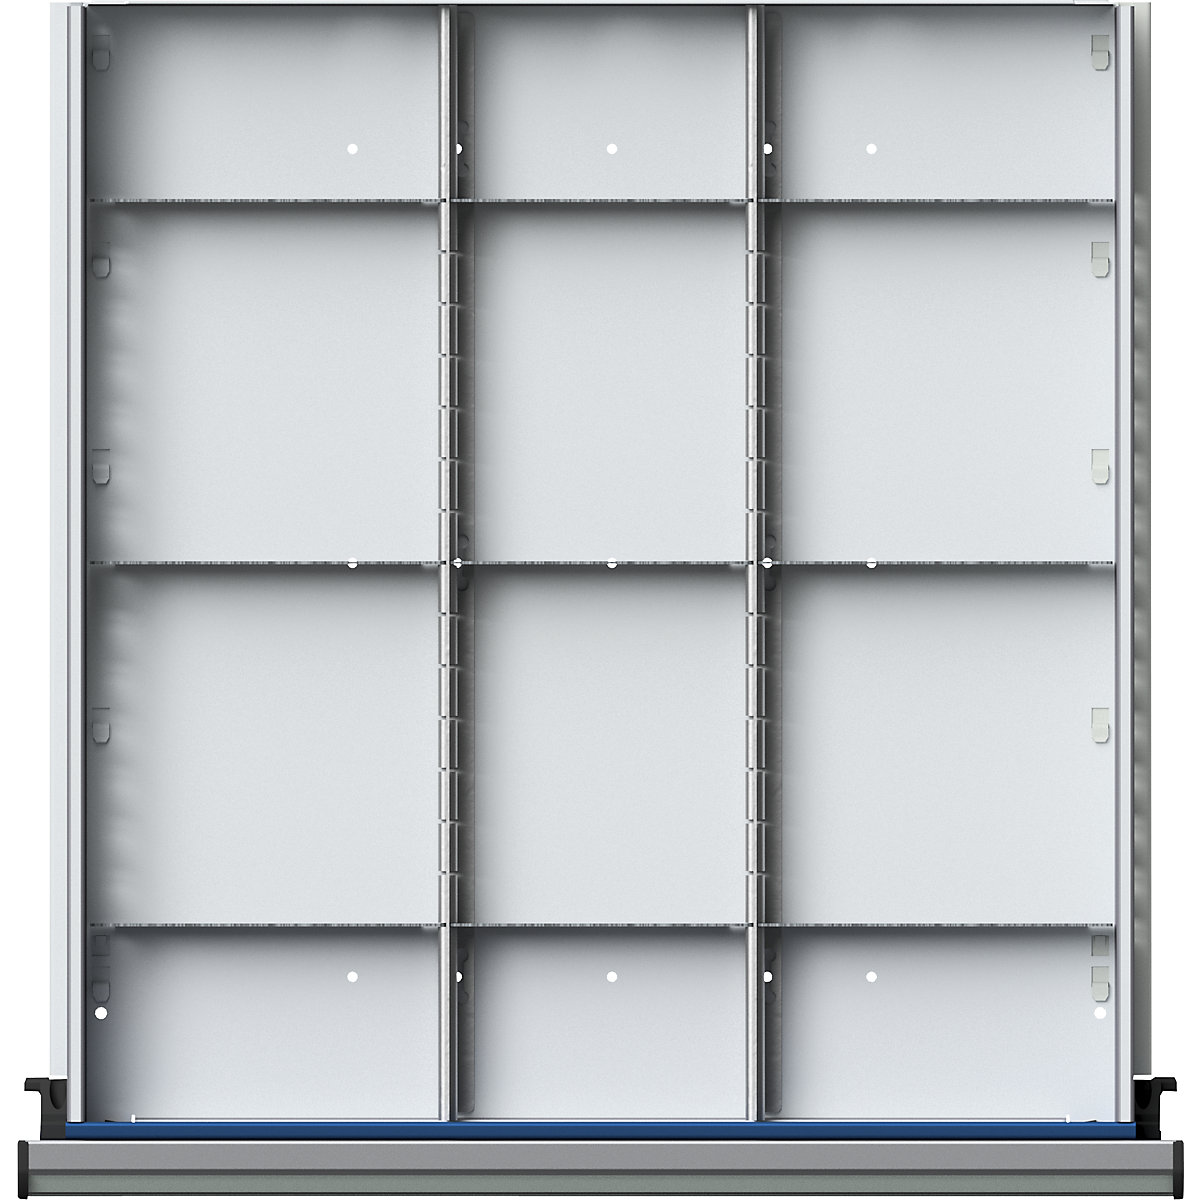 Divisorio per cassetti largh. x prof. 500 x 540 mm – ANKE